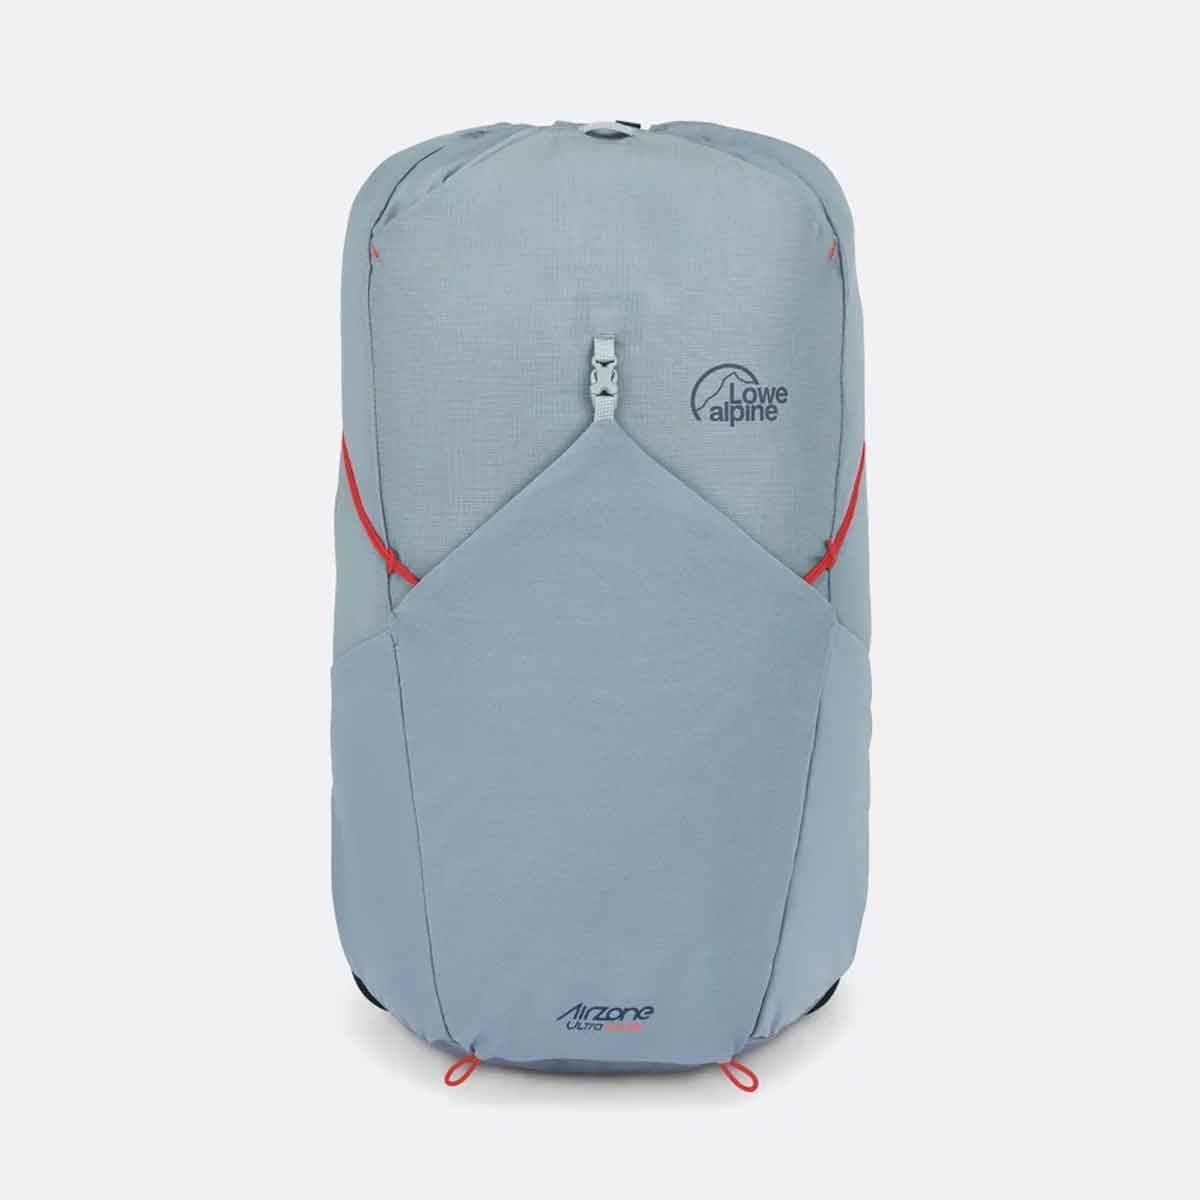 Lowe Alpine AirZone Ultra ND 26 hiking backpack - Women